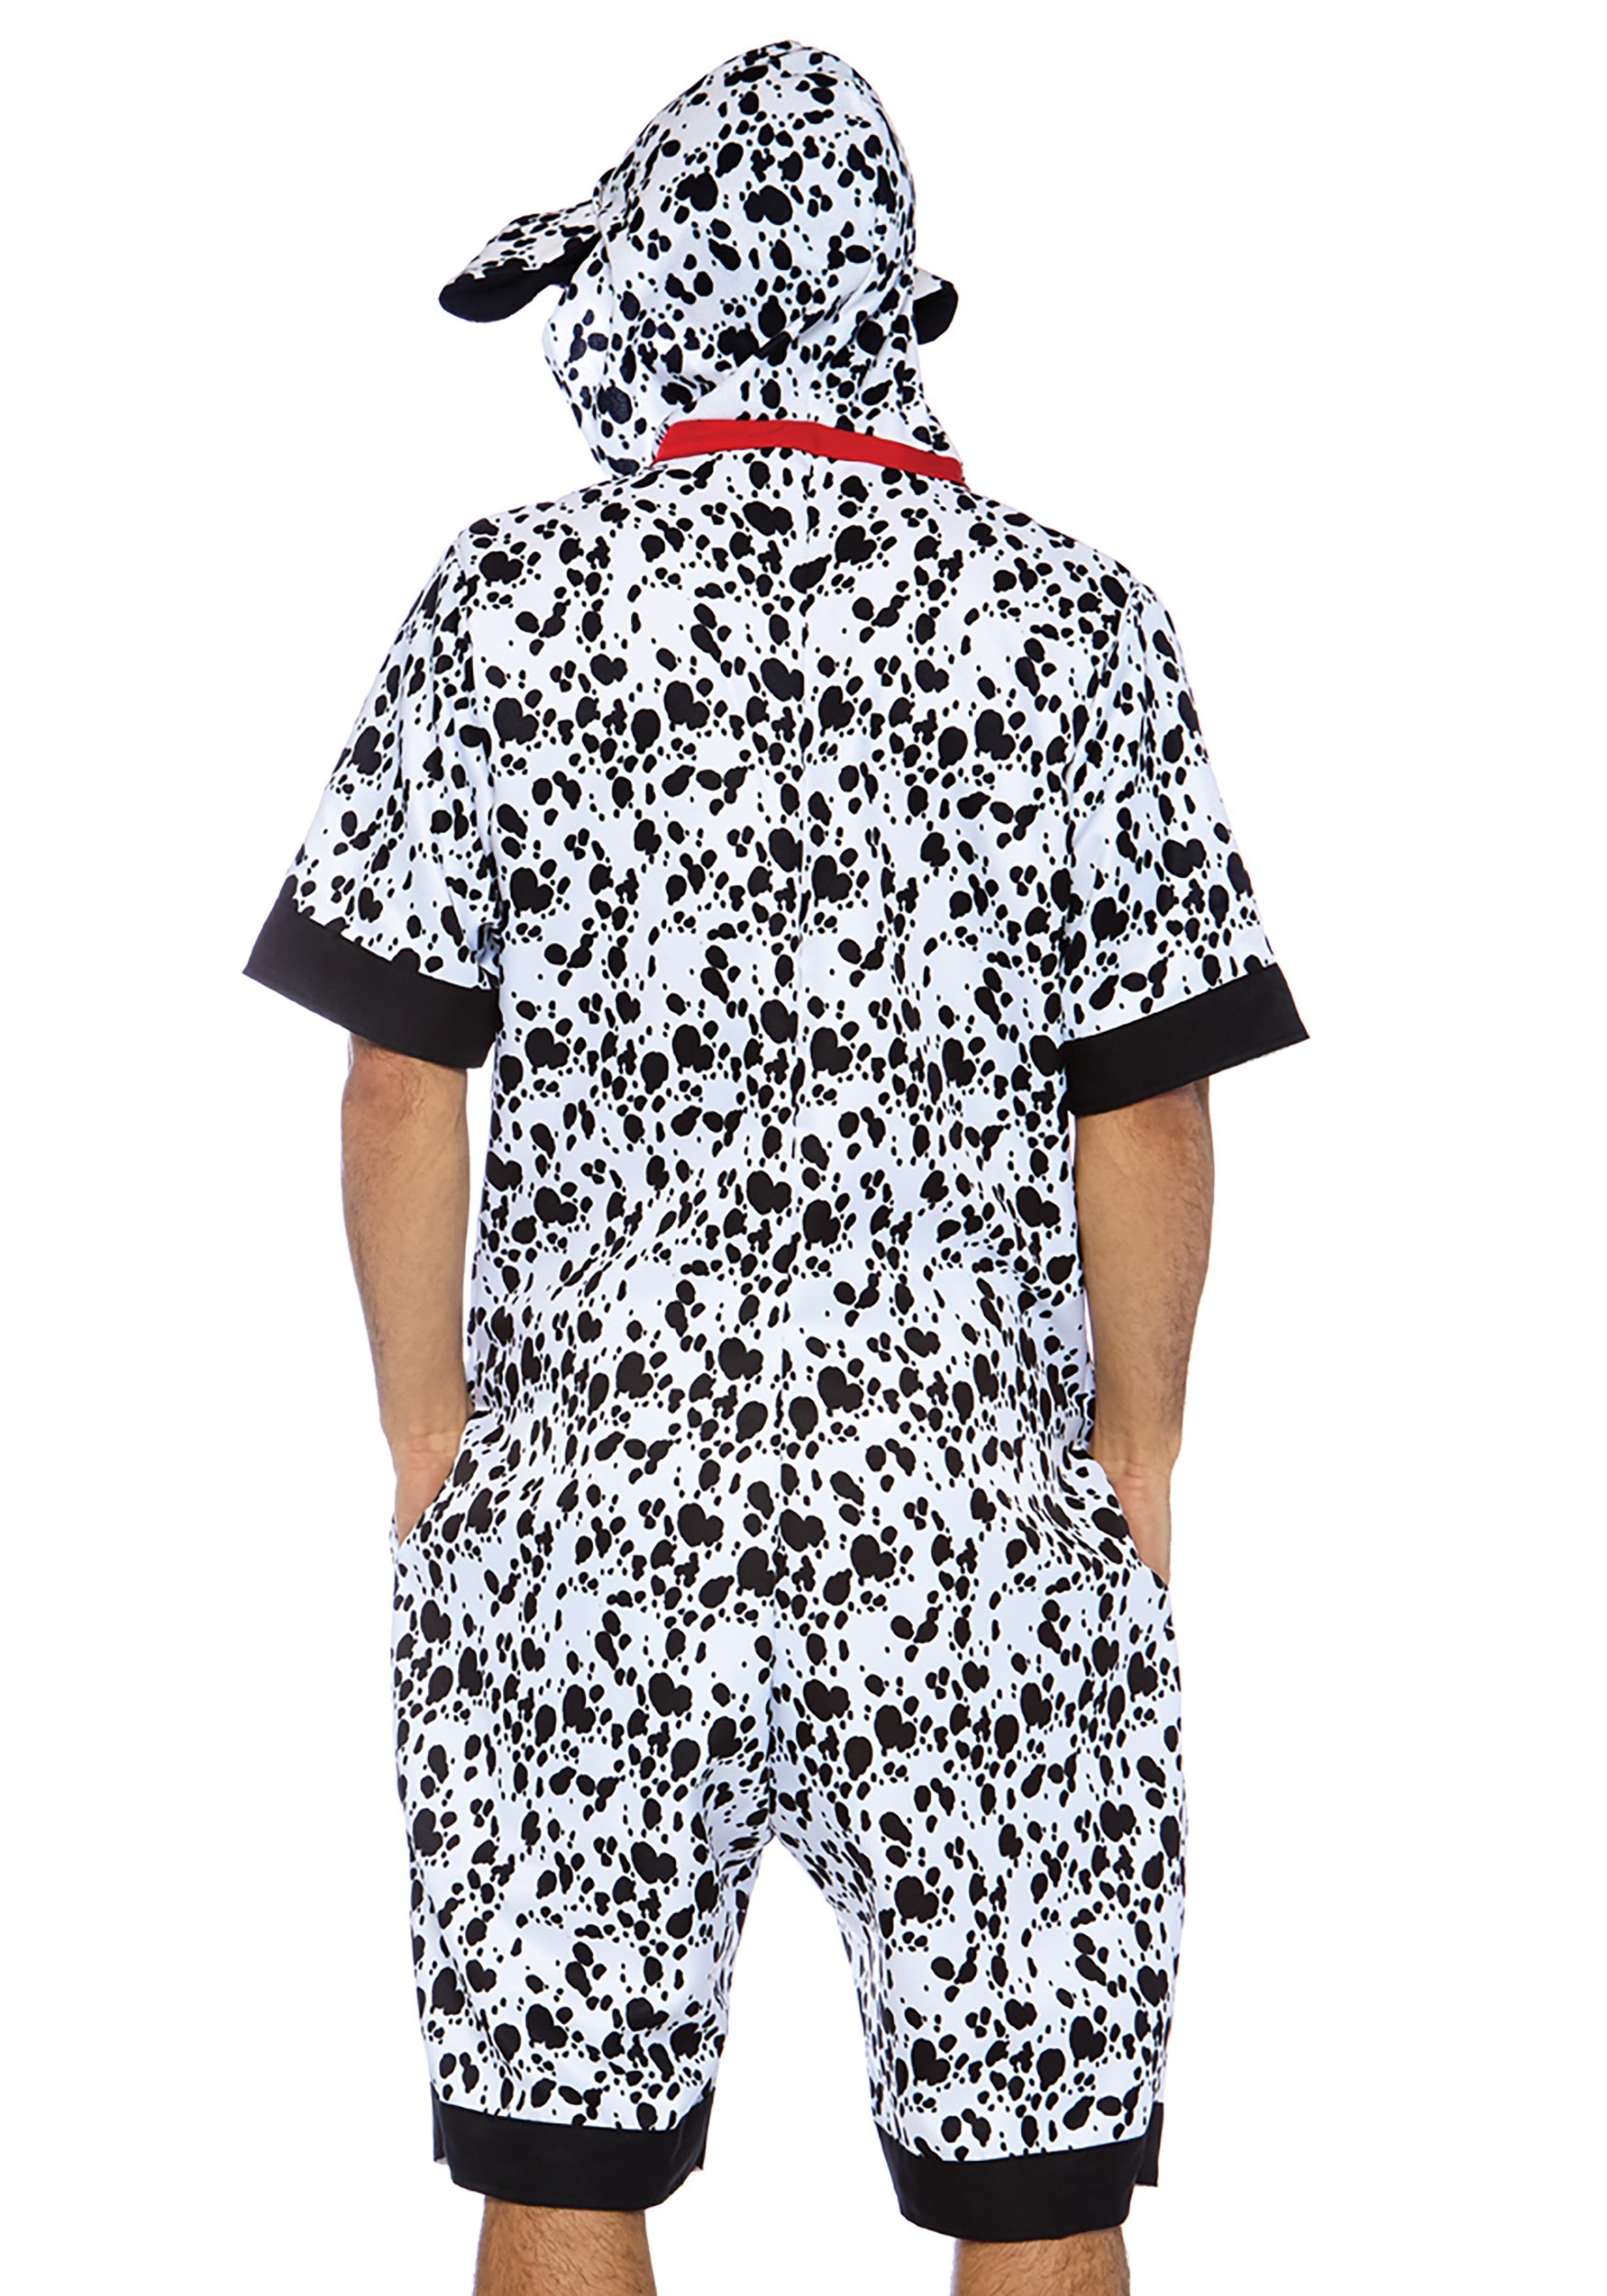 Dalmatian Dog RompHim Costume For Men